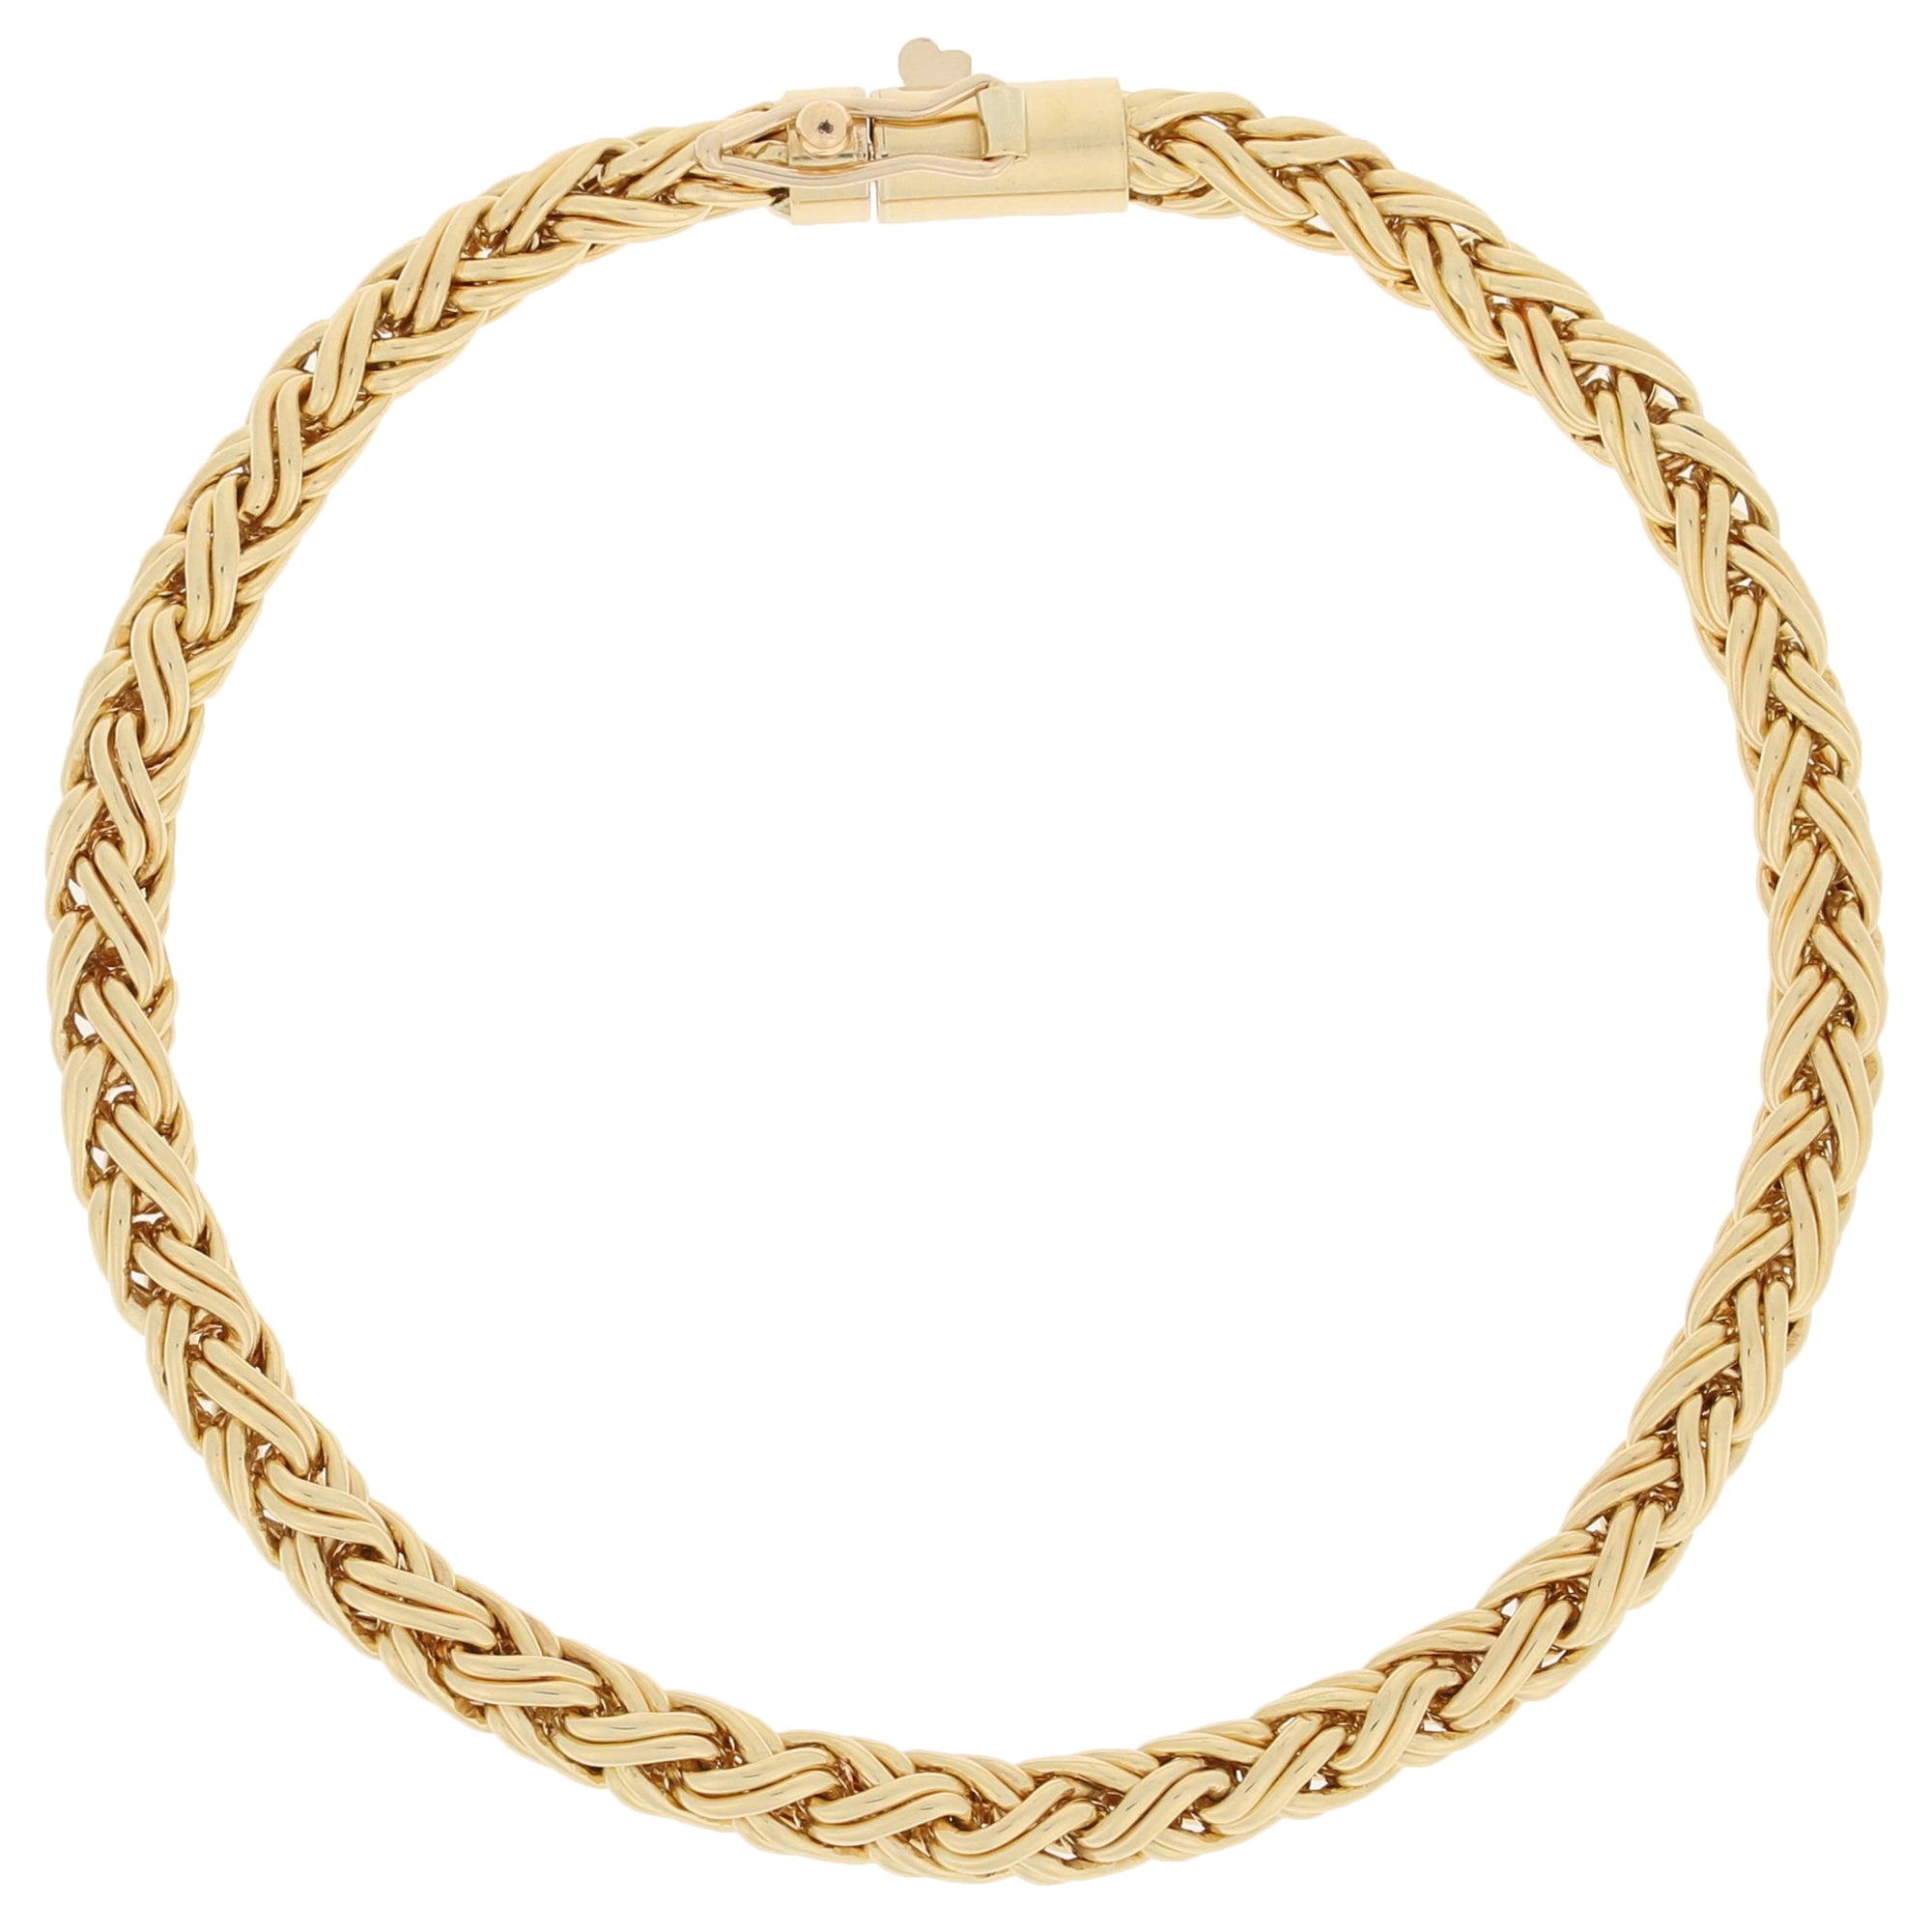 10K YELLOW GOLD WHEAT BRACELET -3MM | Patty Q's Jewelry Inc